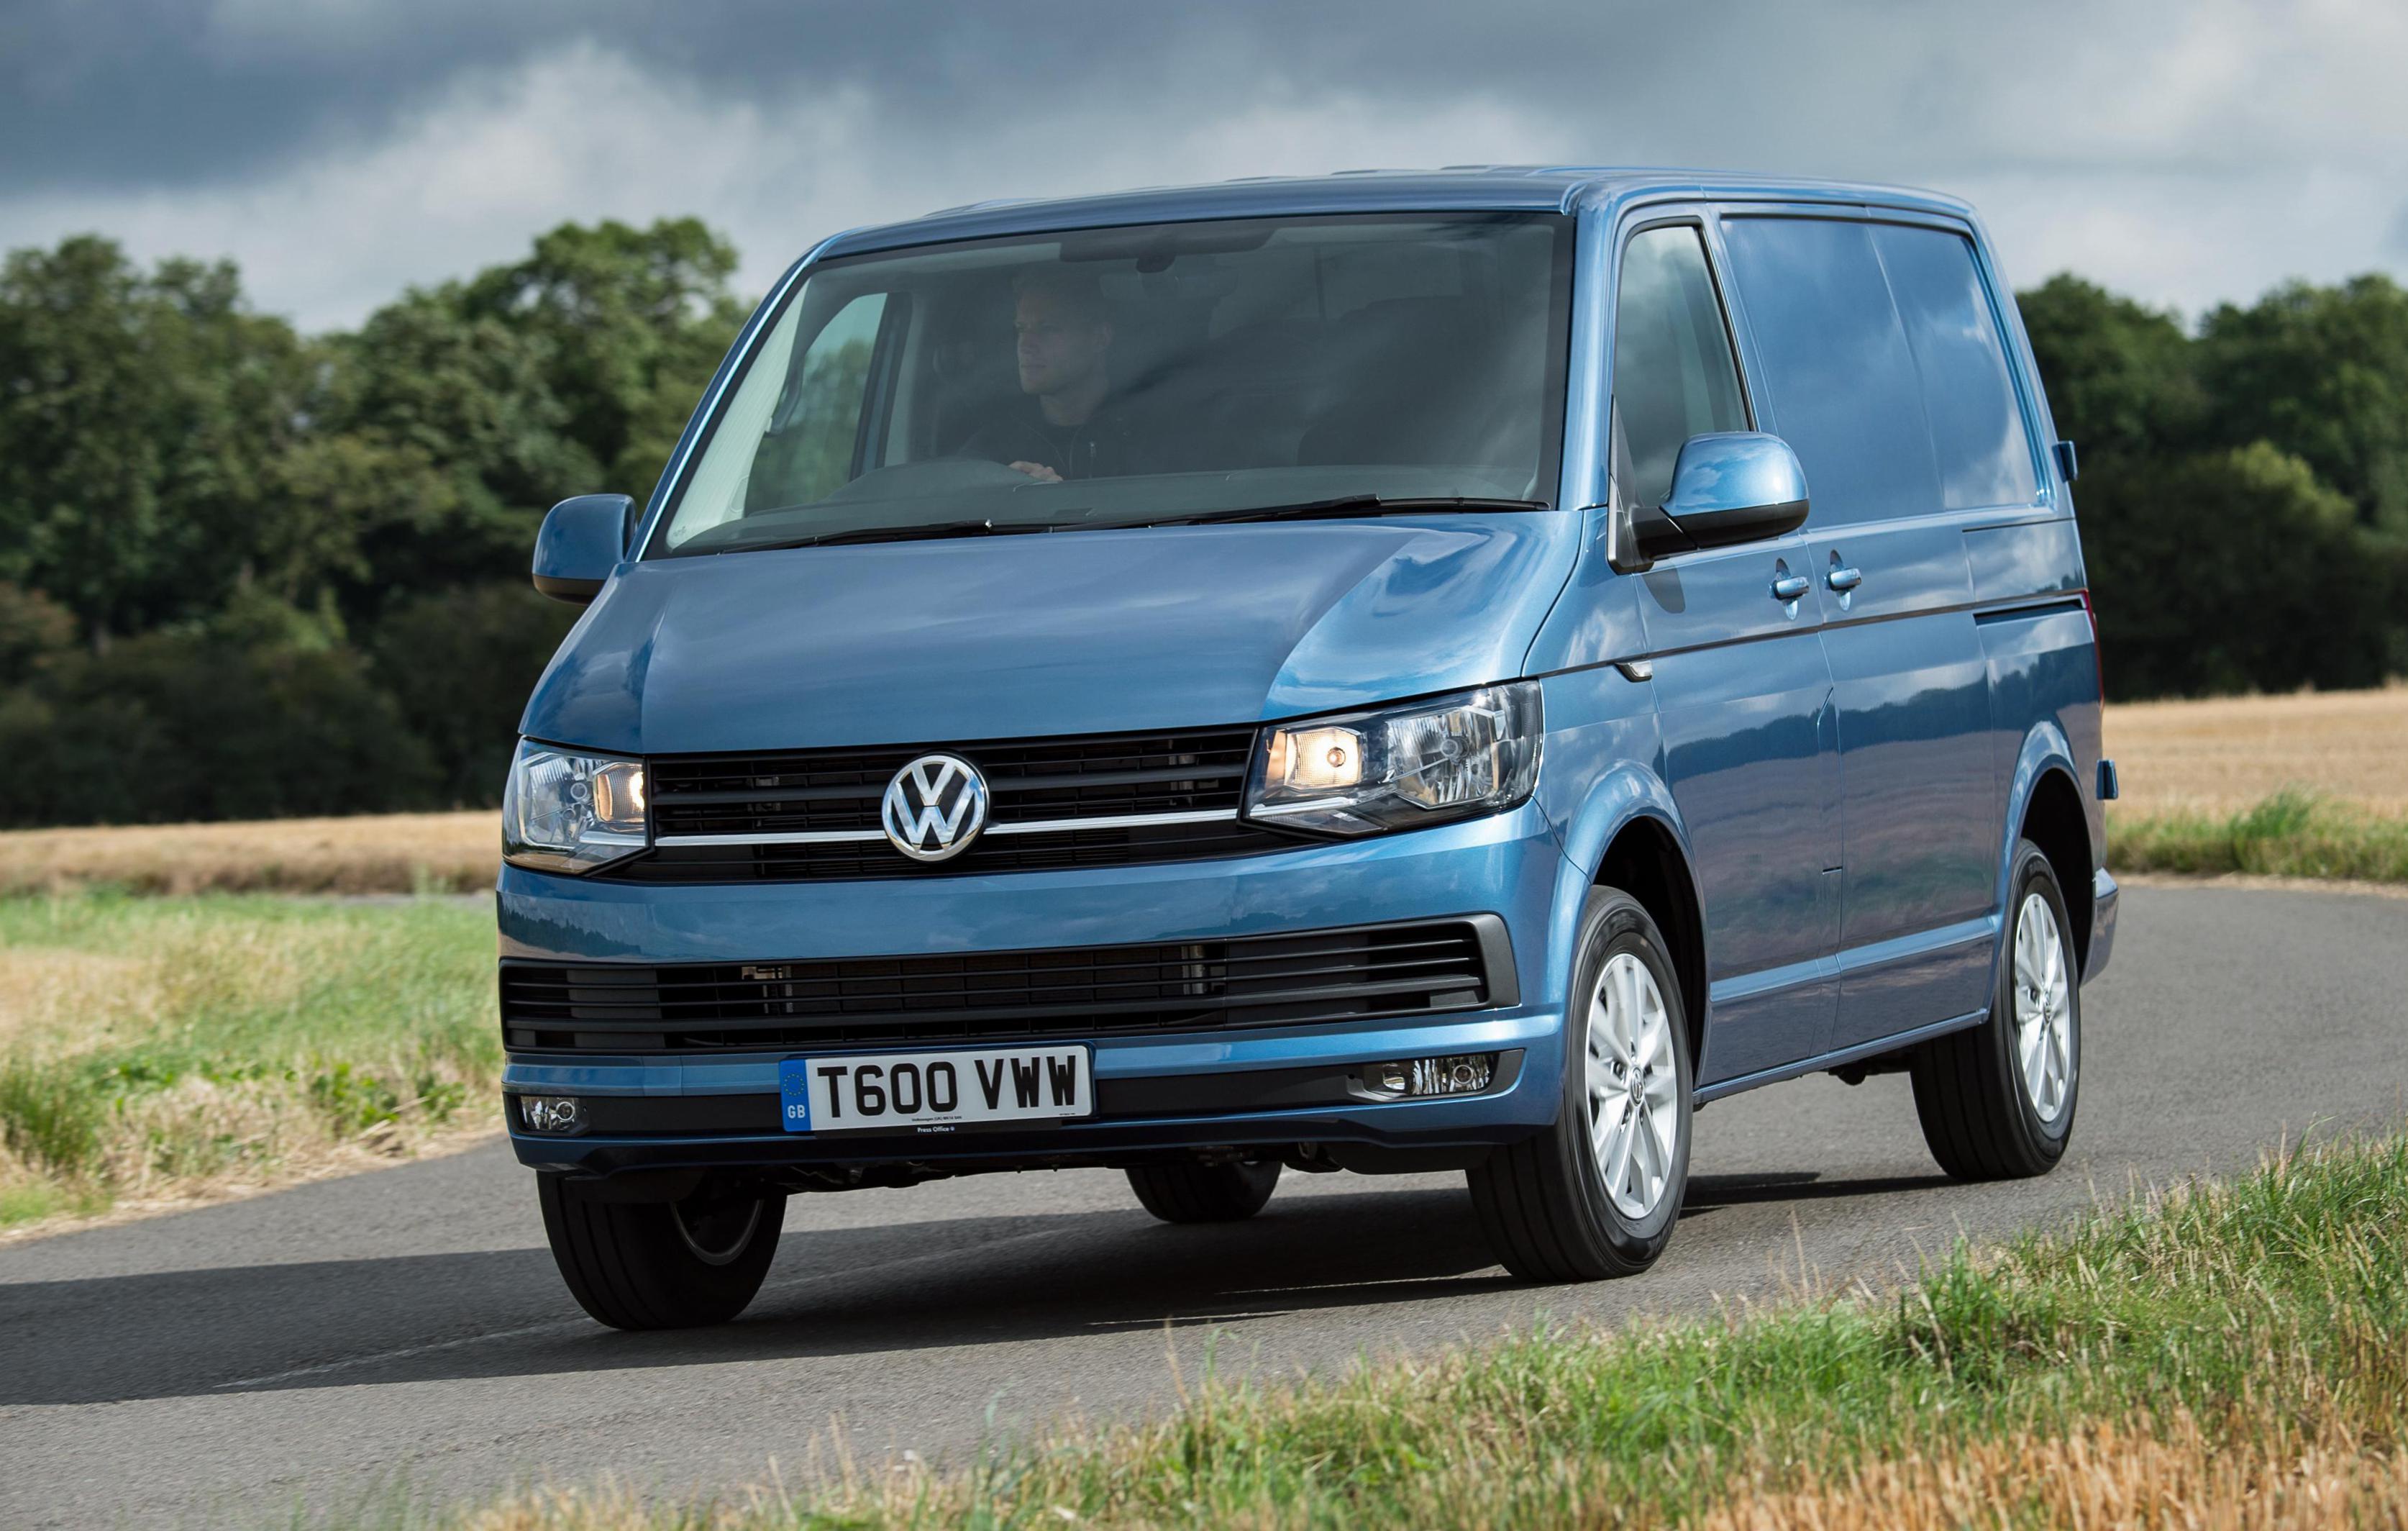 Transporter Kasten Volkswagen prices 2014